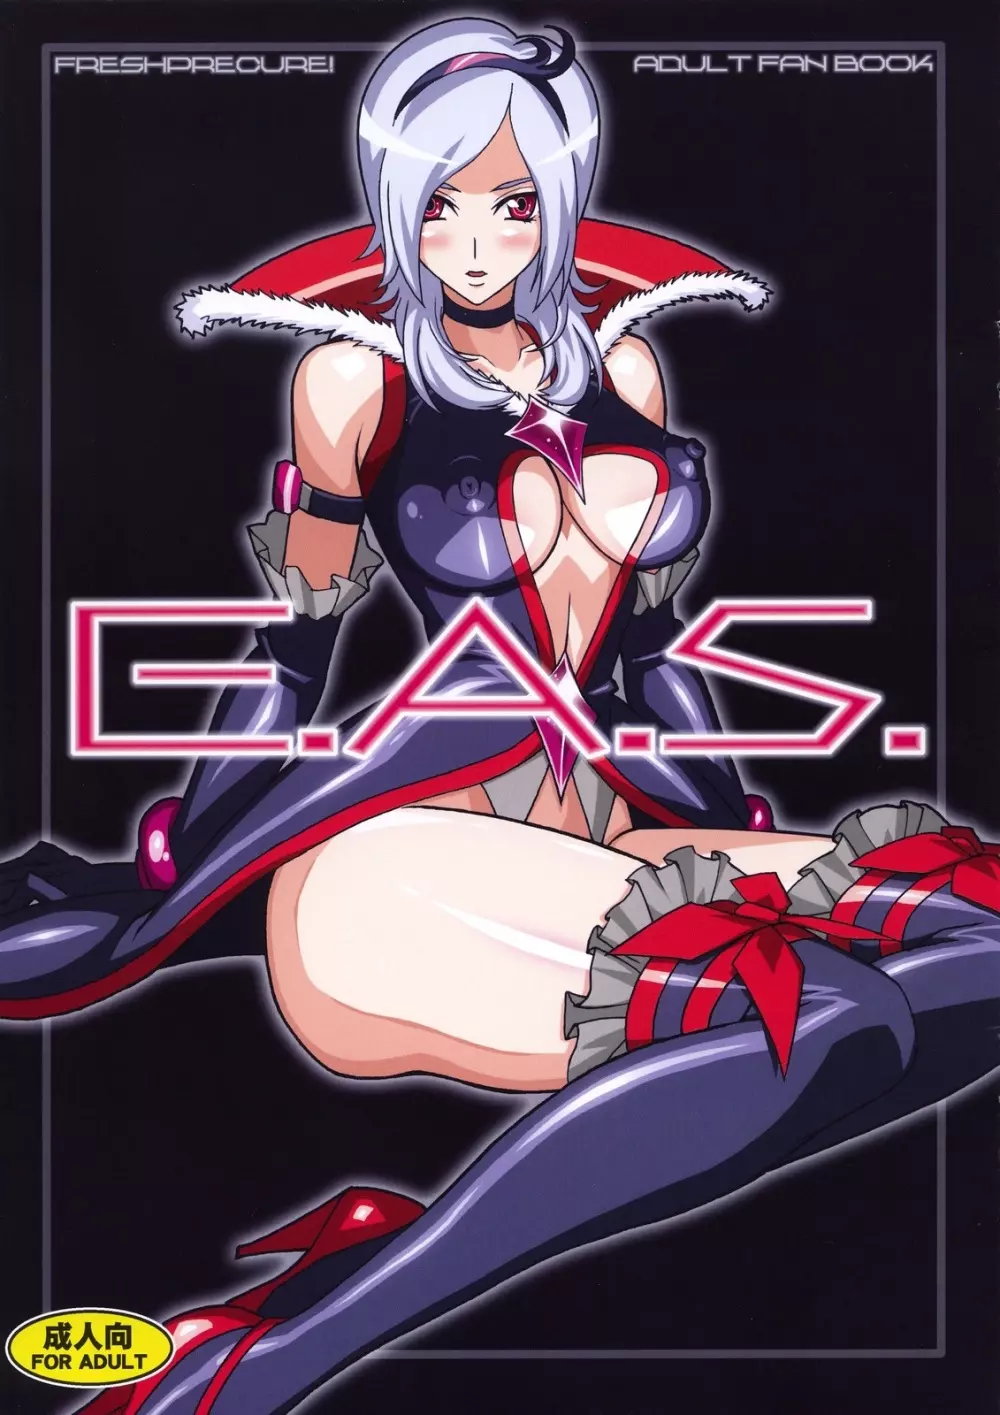 E.A.S. Erotic Adult Slave!